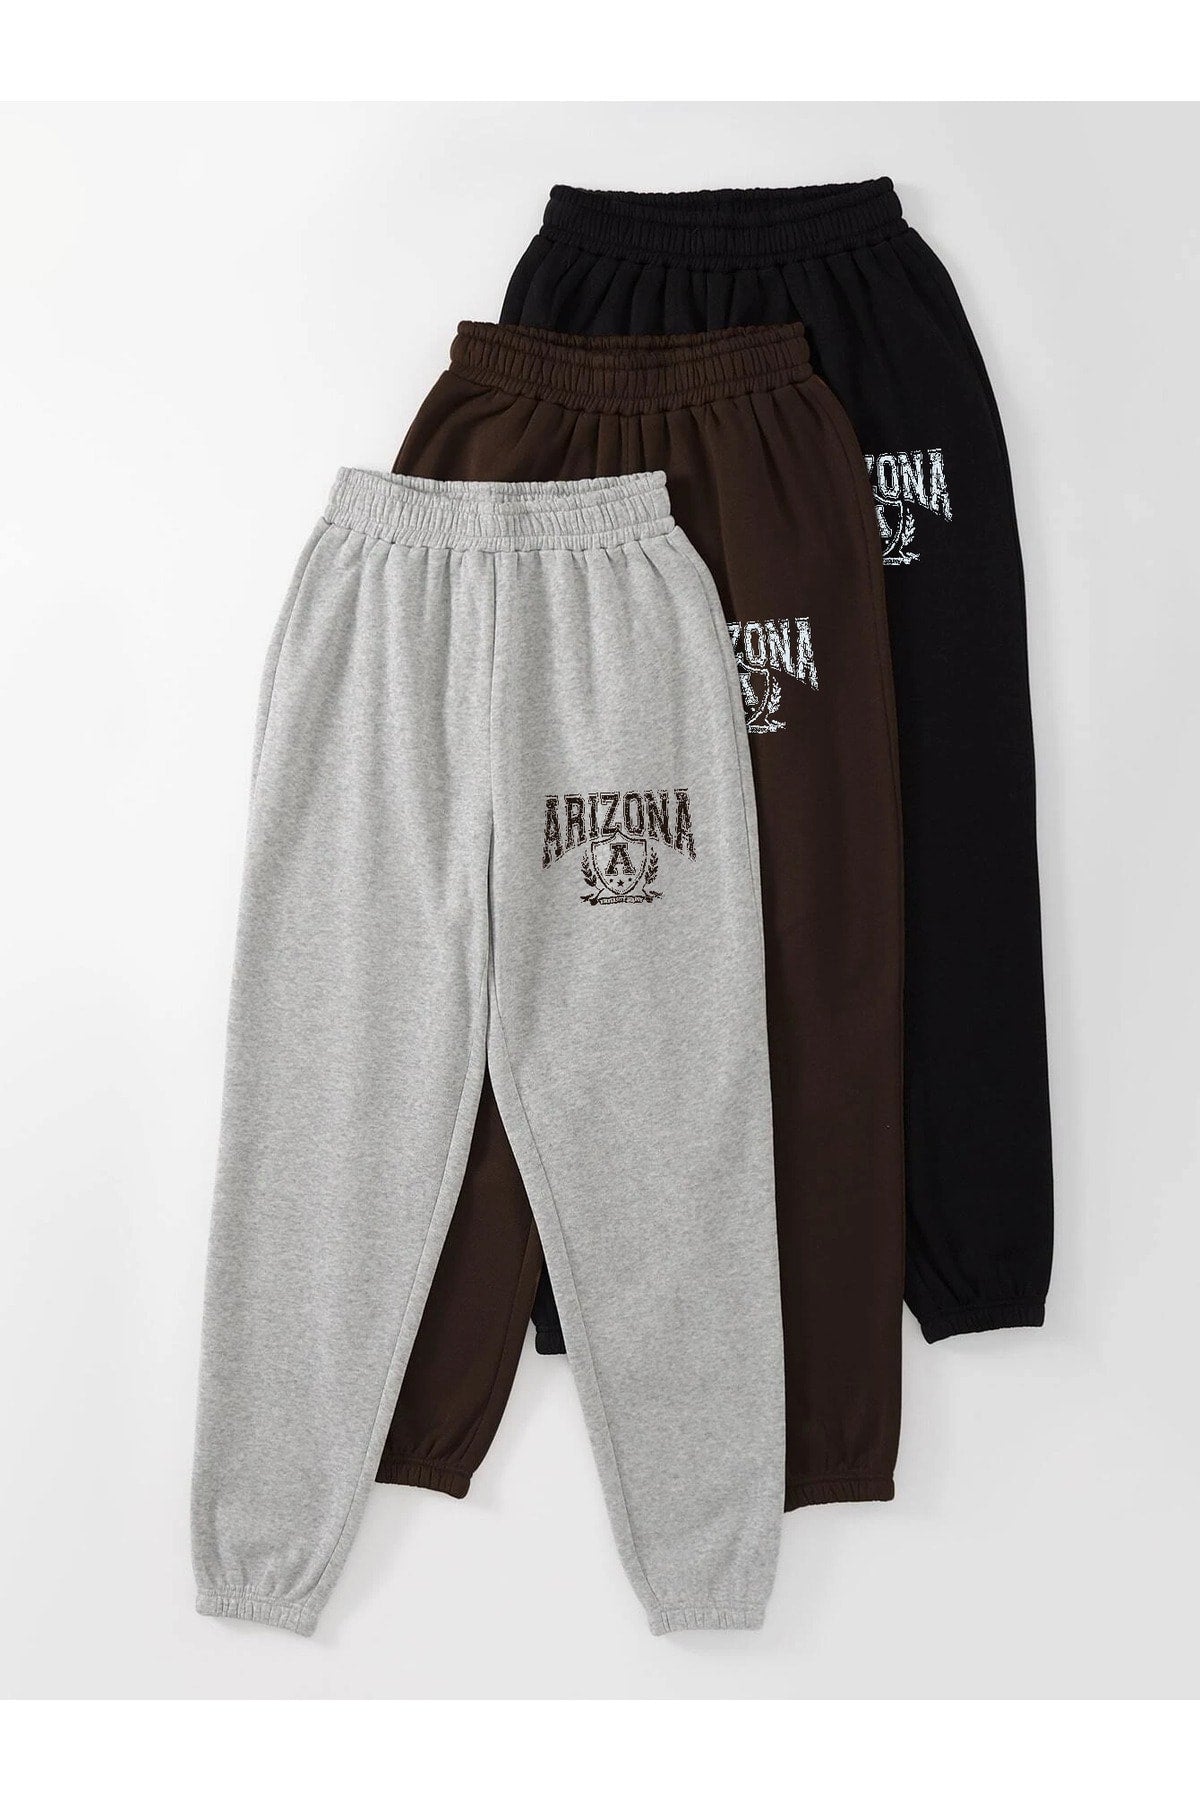 3-pack Arizona Printed Jogger Sweatpants - Black Gray And Brown Elastic Leg High Waist Summer